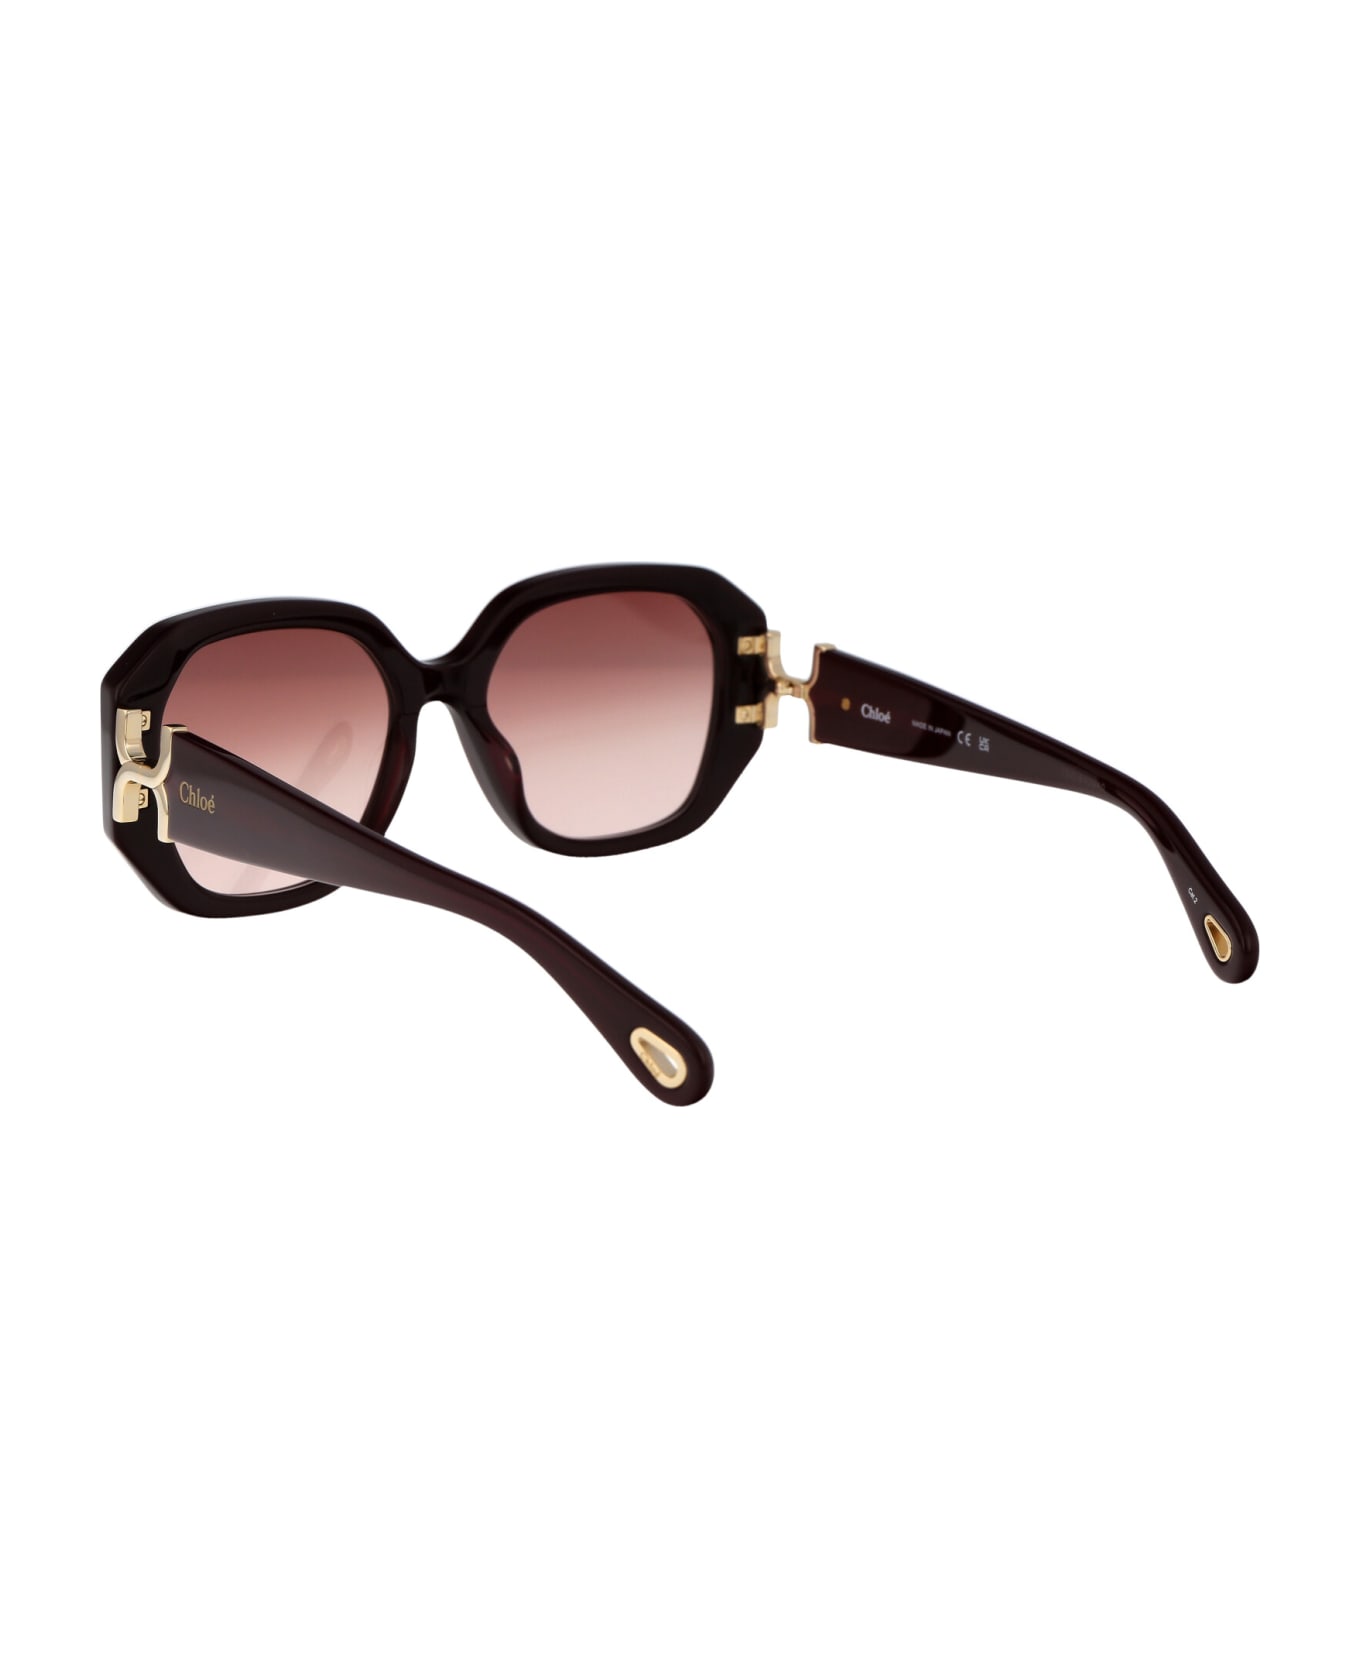 Chloé Eyewear Ch0236s Sunglasses - 003 BURGUNDY BURGUNDY ORANGE